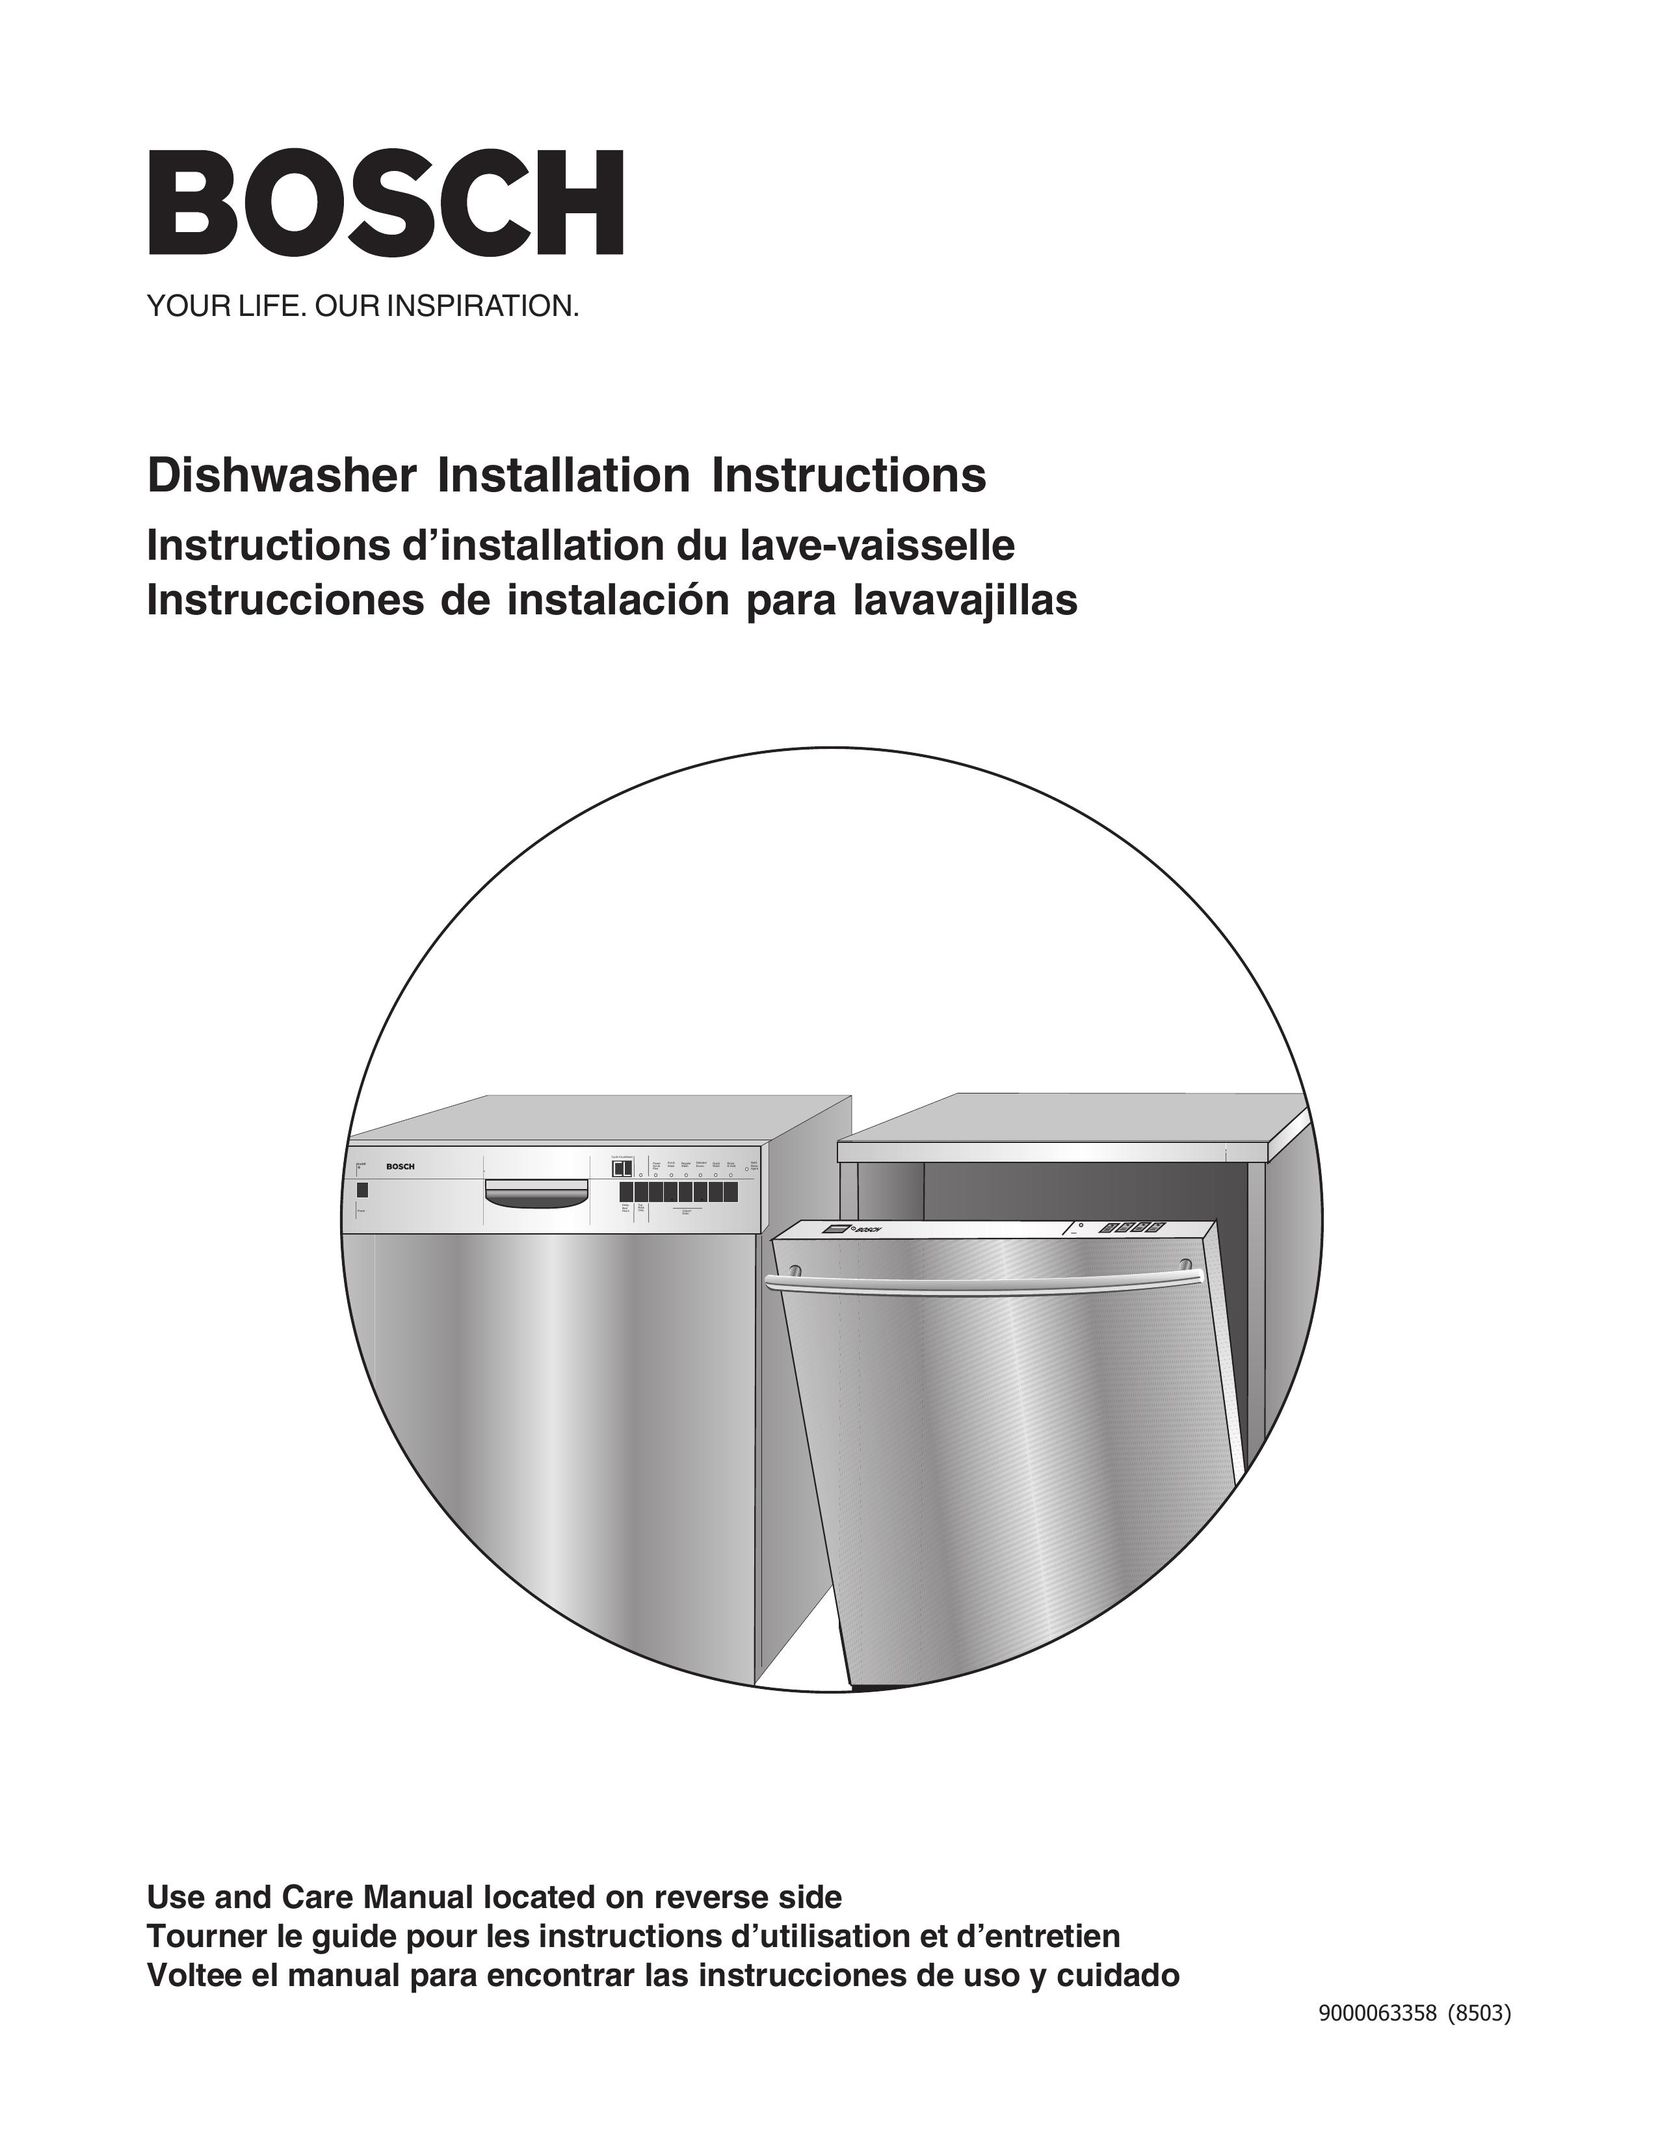 Bosch Appliances BOSCH diswacher Dishwasher User Manual